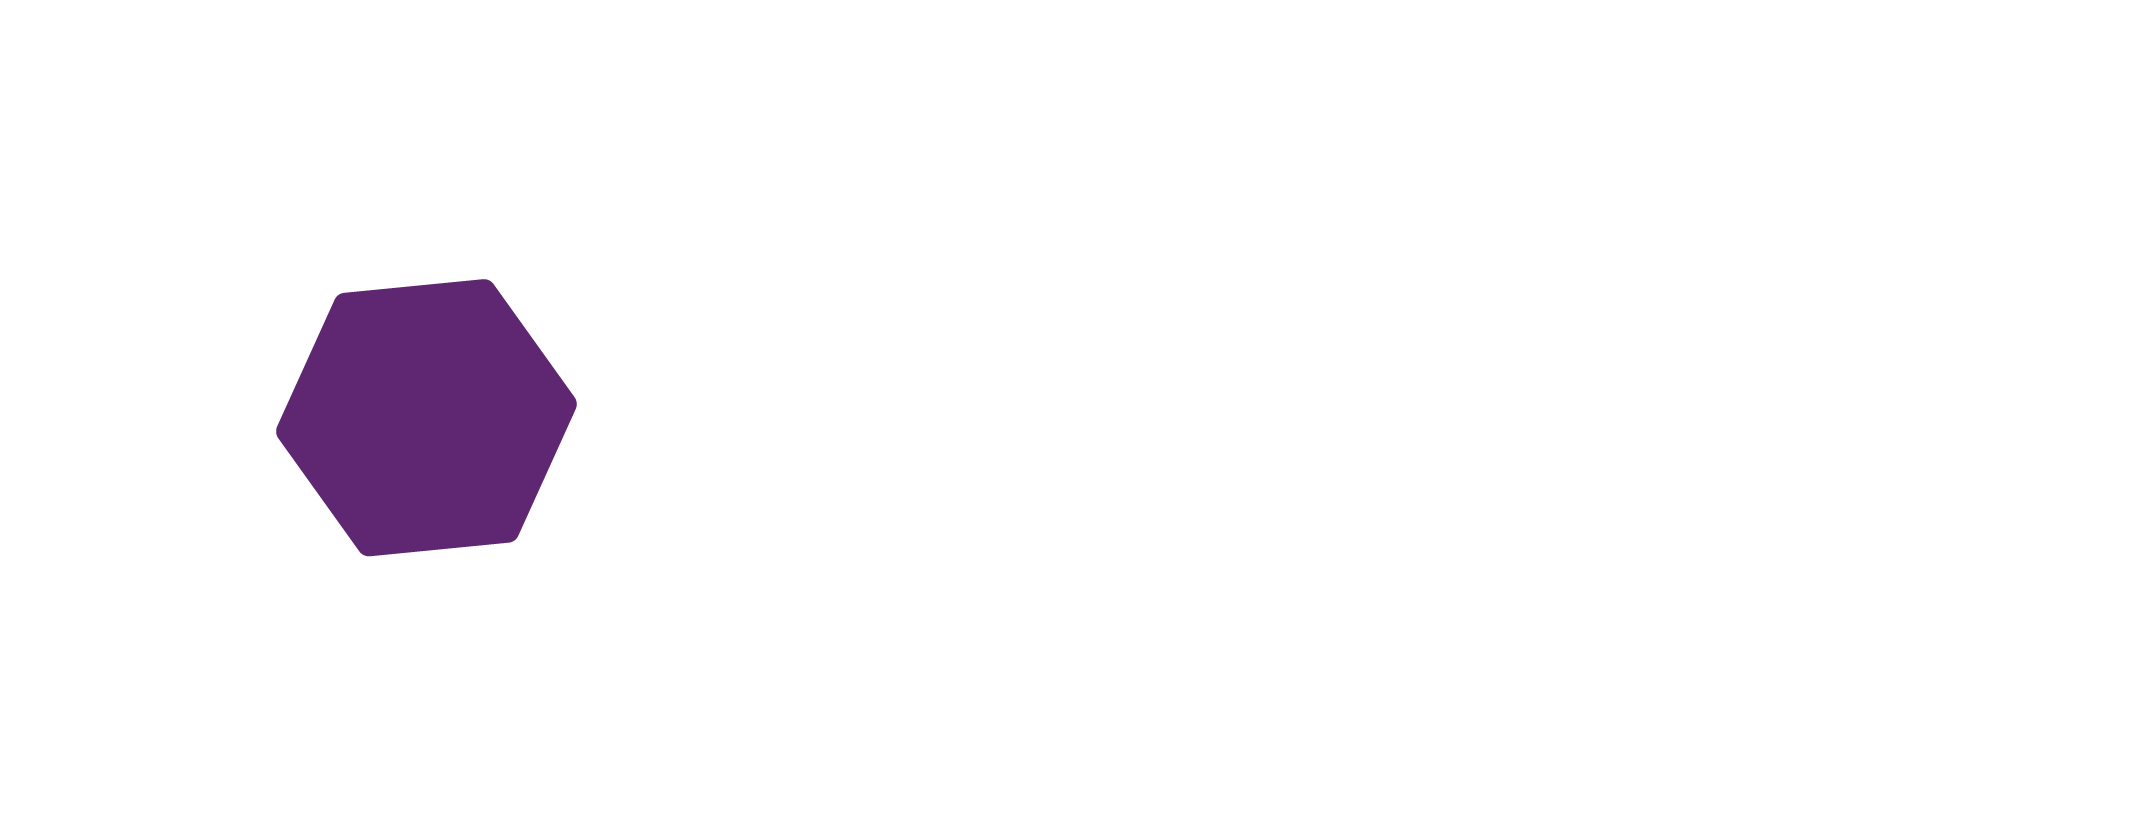 Acram_Logo_white_purple